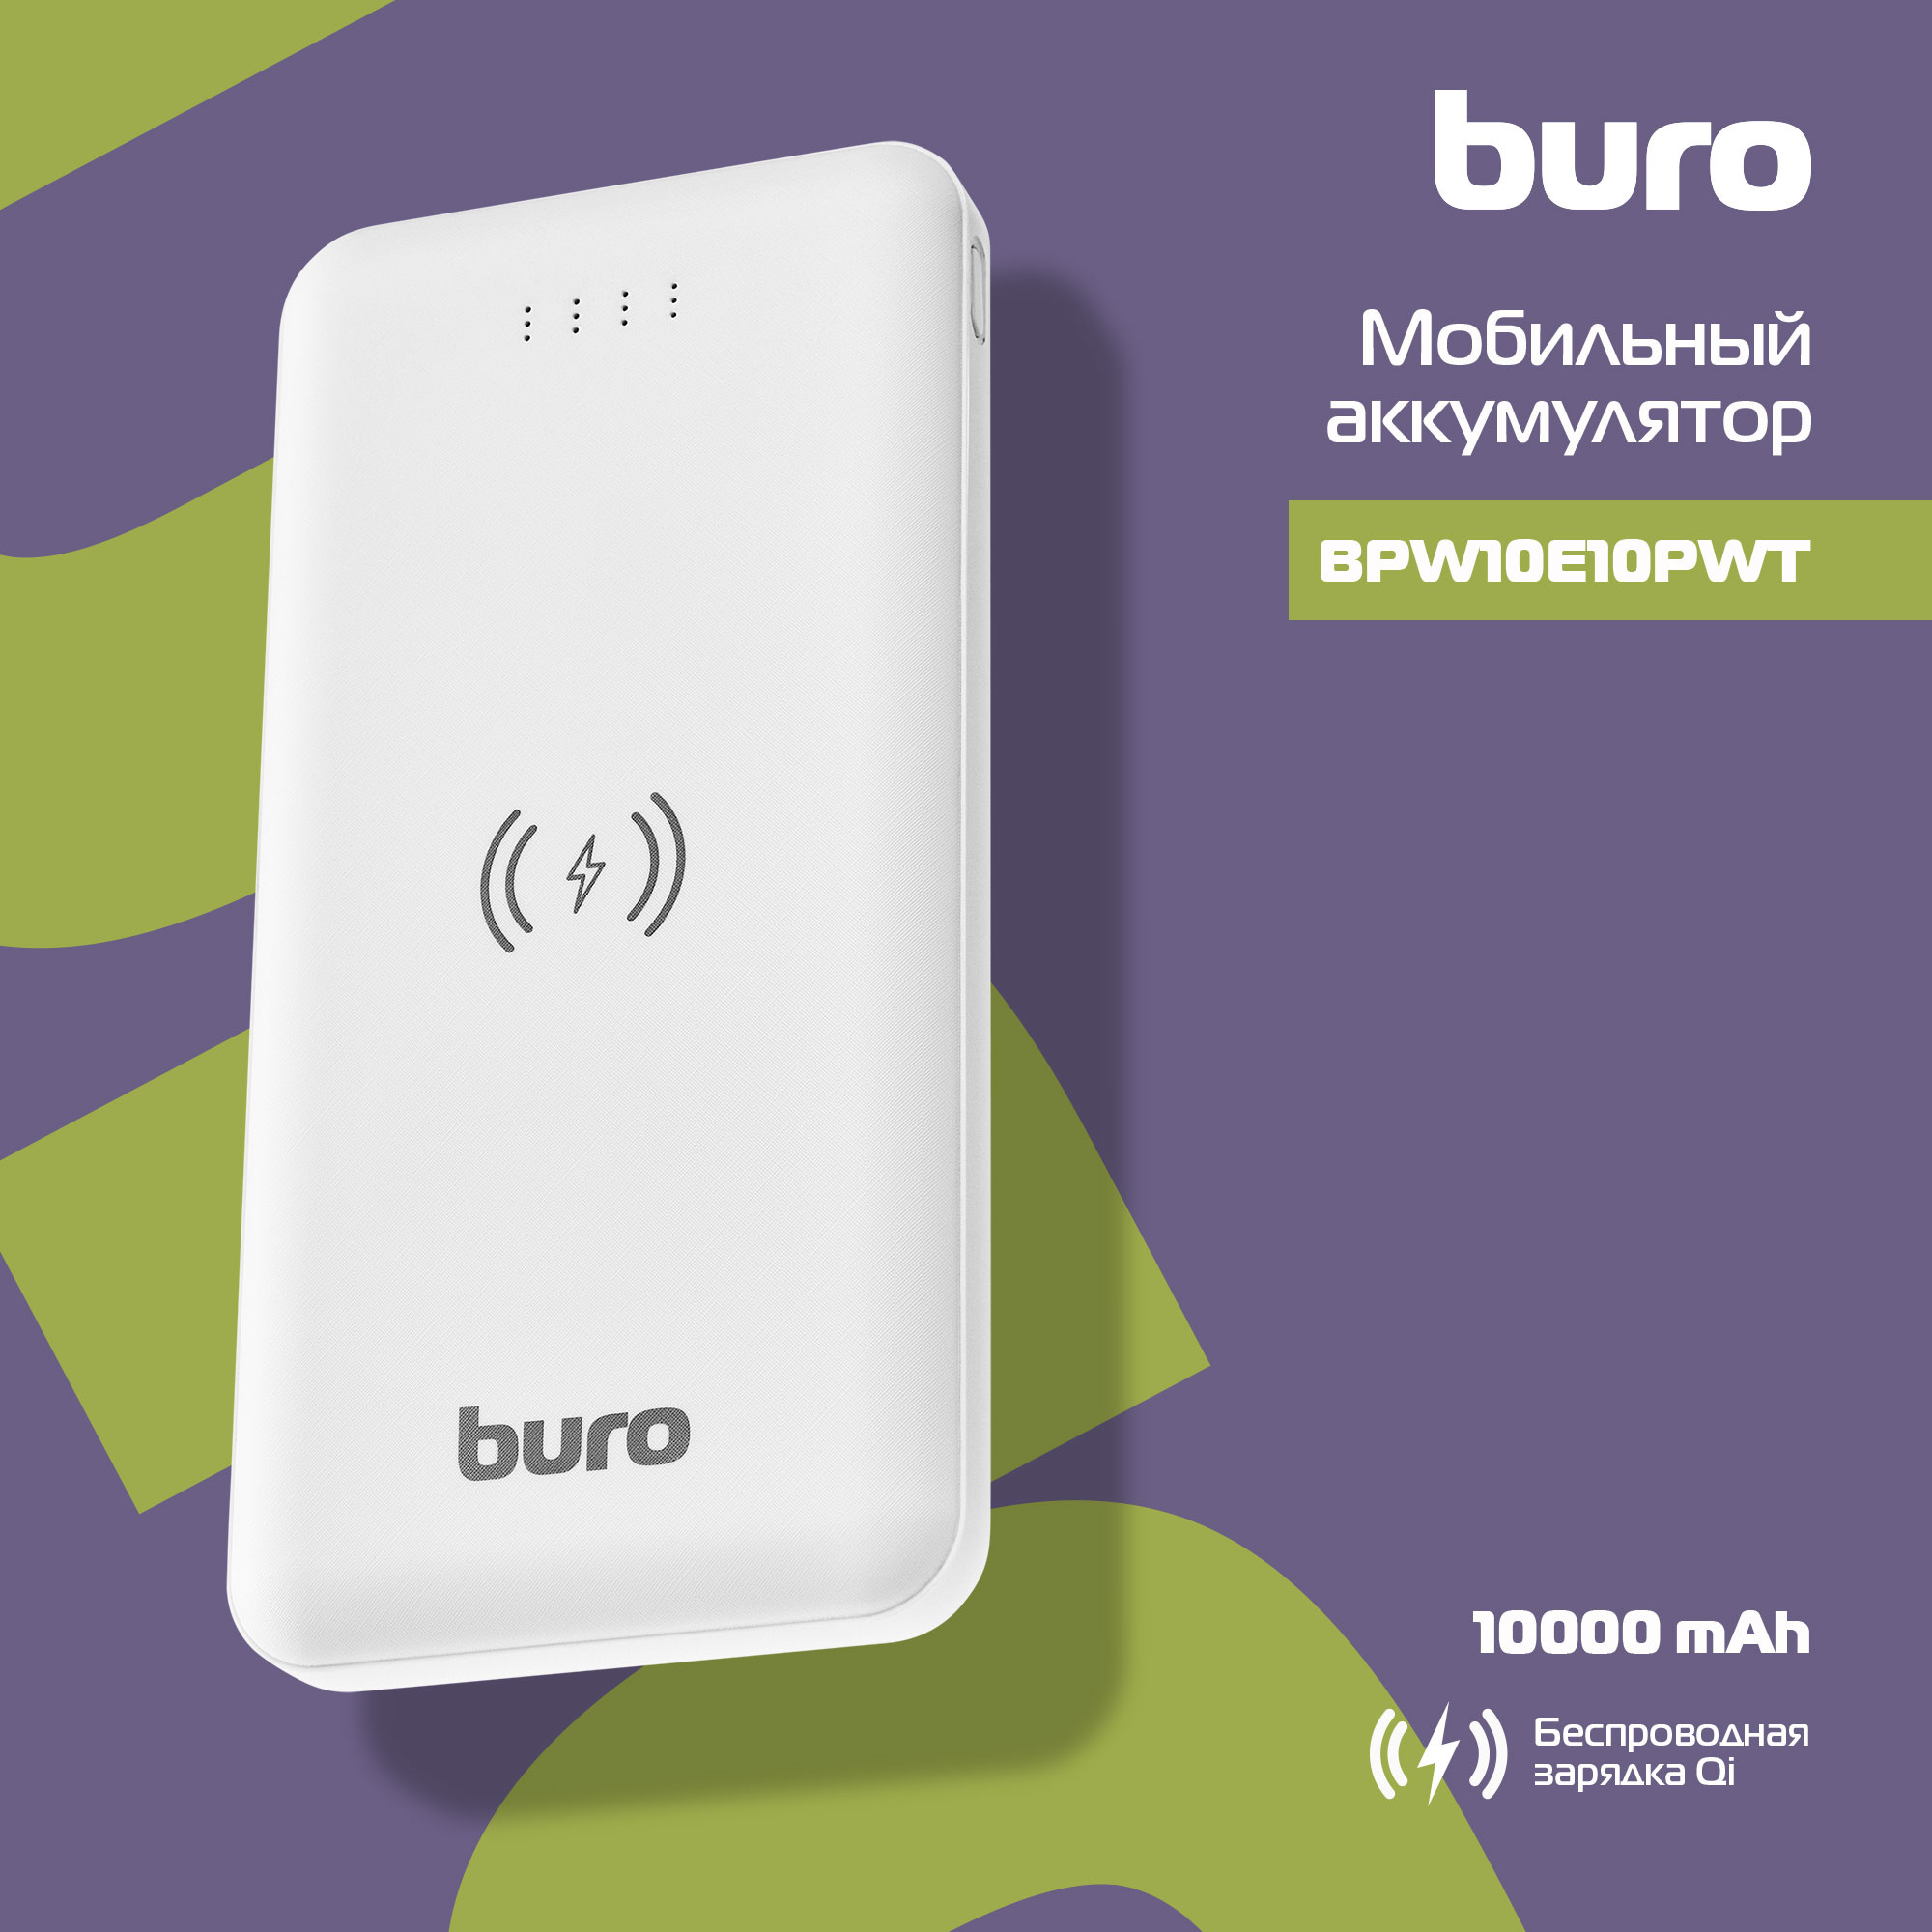 Мобильный аккумулятор Buro BPW10E 10000mAh 10W 2A 2xUSB-A беспров.зар. белый (BPW10E10PWT)